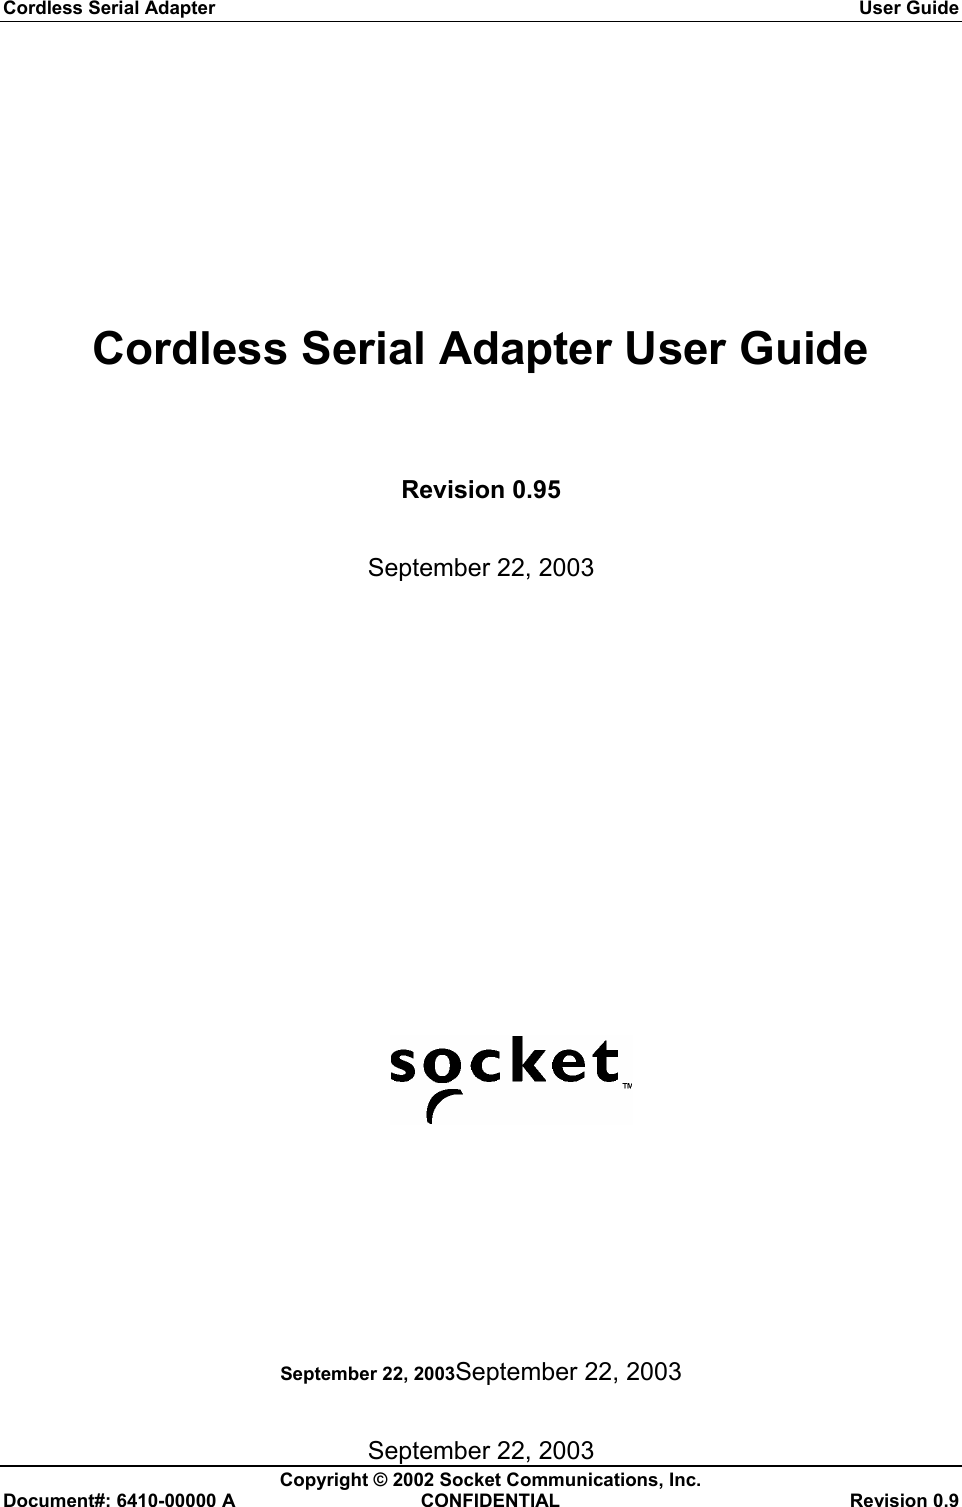 Cordless Serial Adapter  User Guide September 22, 2003September 22, 2003 September 22, 2003   Copyright © 2002 Socket Communications, Inc.   Document#: 6410-00000 A  CONFIDENTIAL  Revision 0.9 Cordless Serial Adapter User Guide Revision 0.95 September 22, 2003   